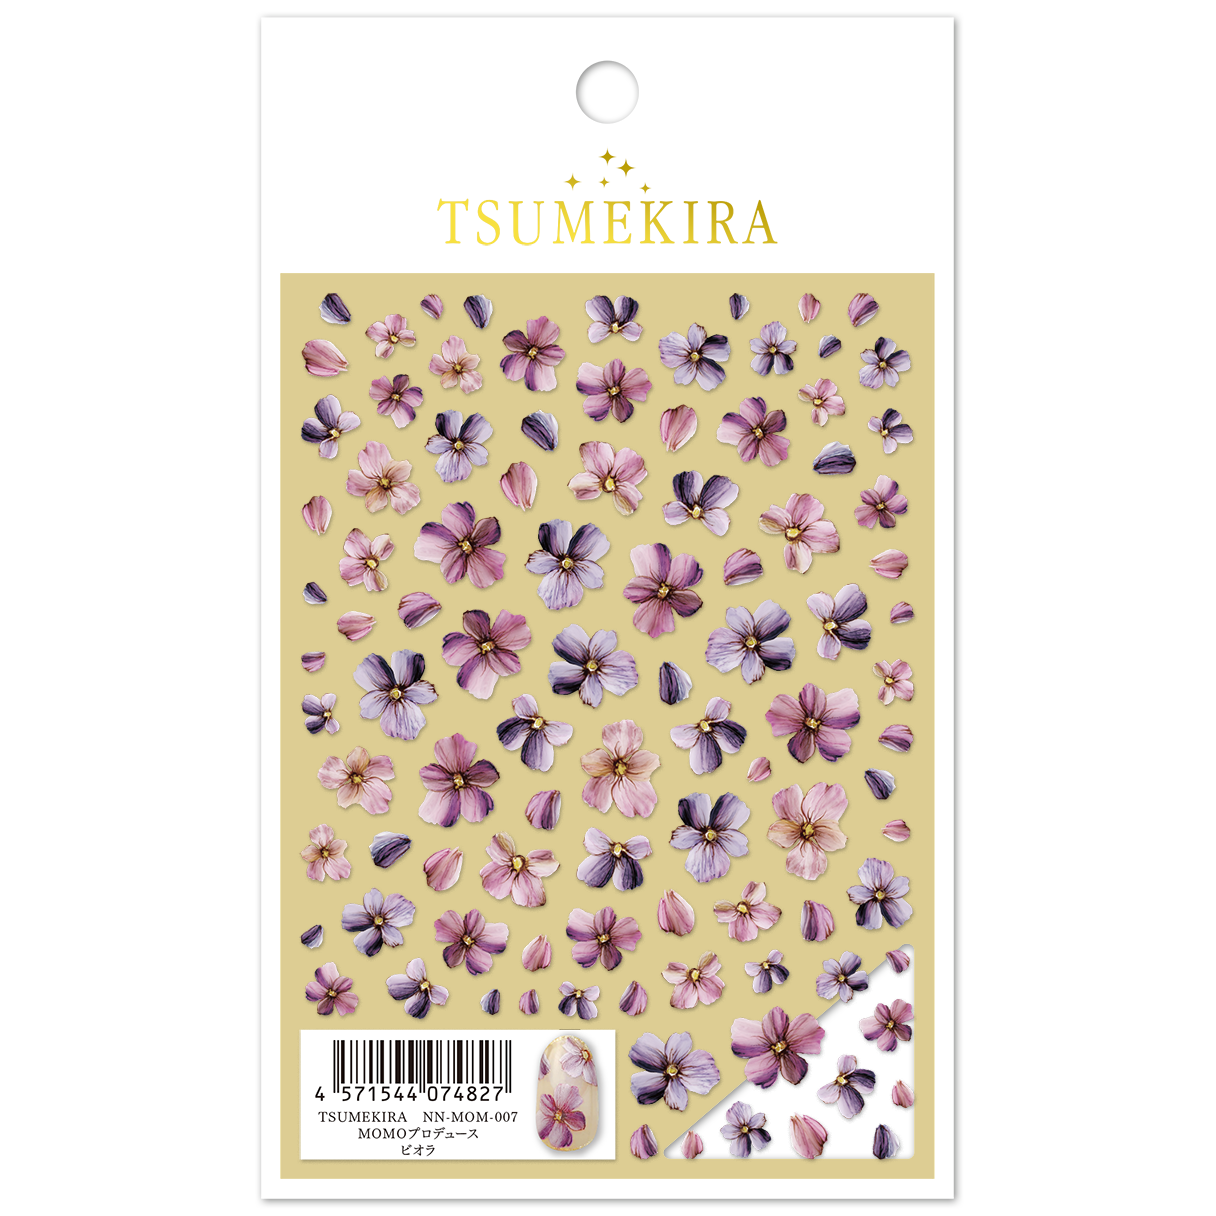 [On order/not returnable] NN-MOM-007 MOMO Produce Viola Tsume Kira Nail Stickers (sheets)